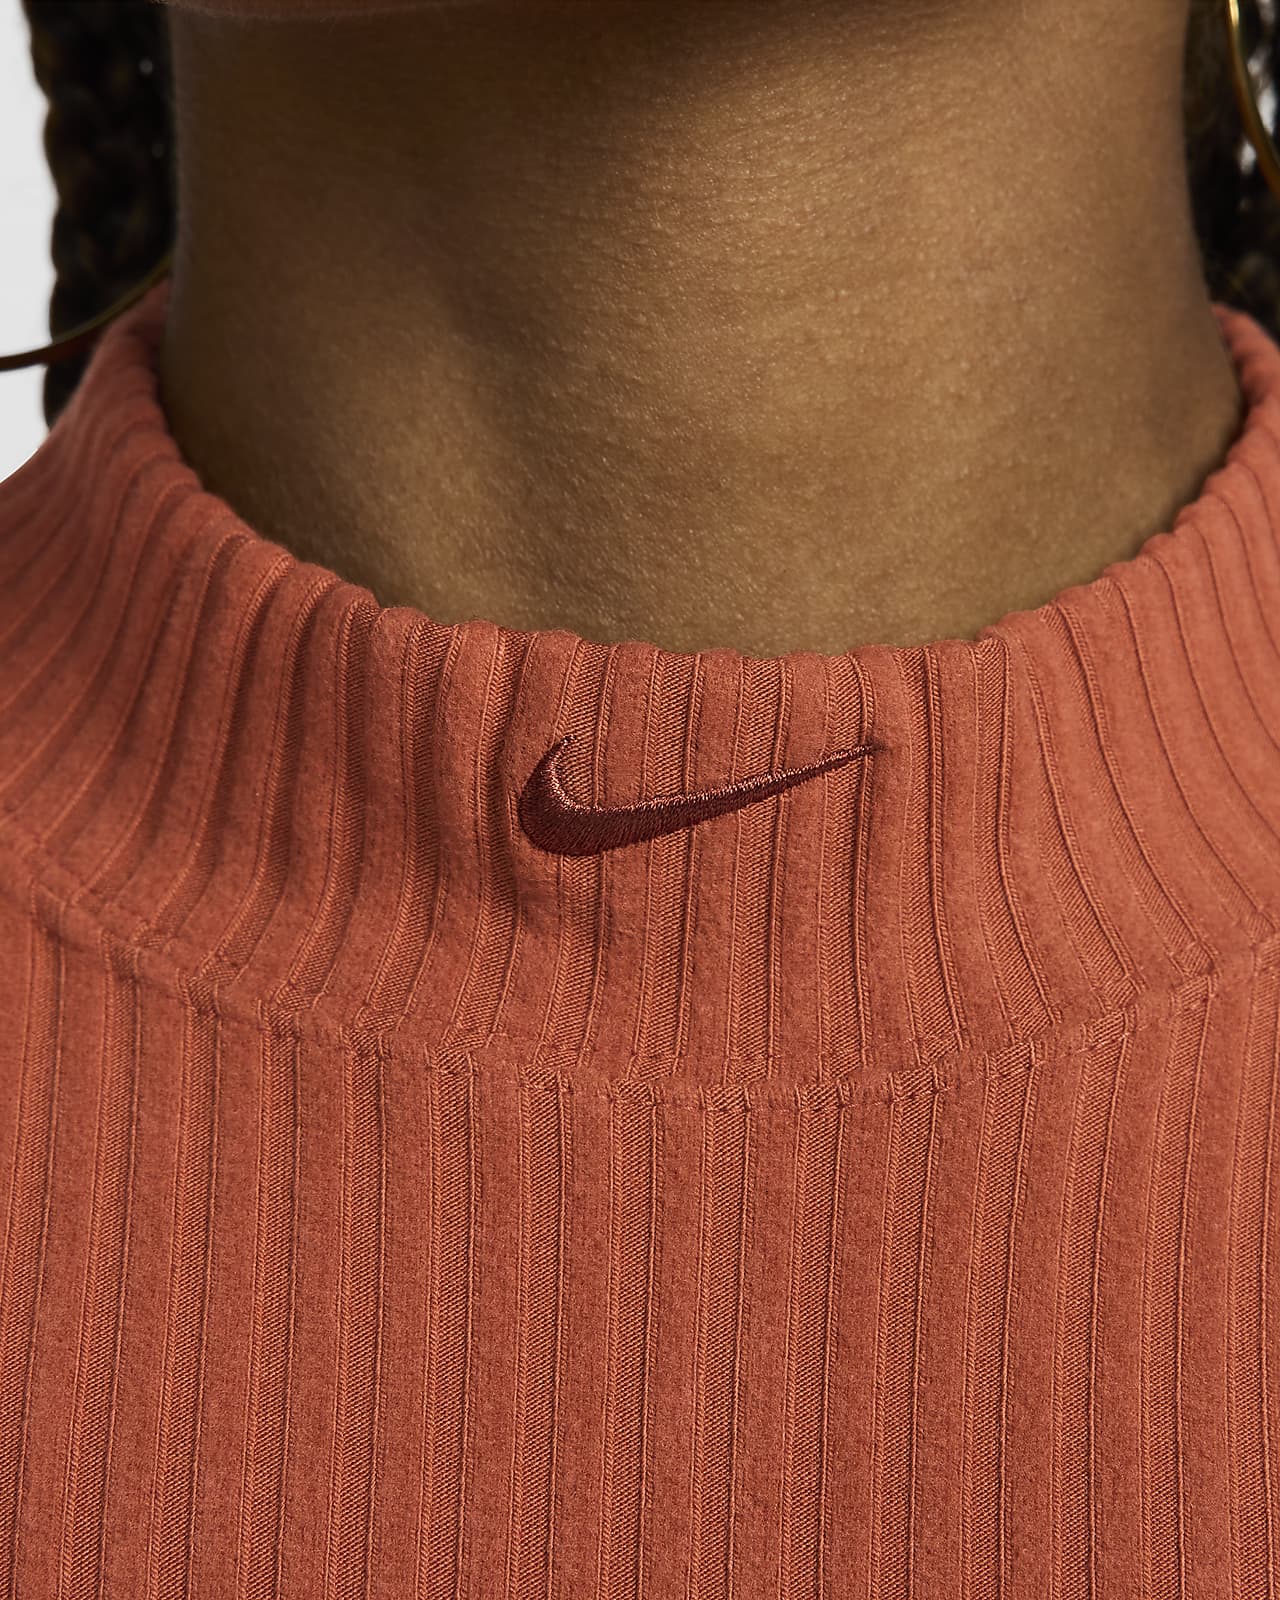 Nike Sportswear Chill Knit Women's Tight Mock-Neck Ribbed Cropped 